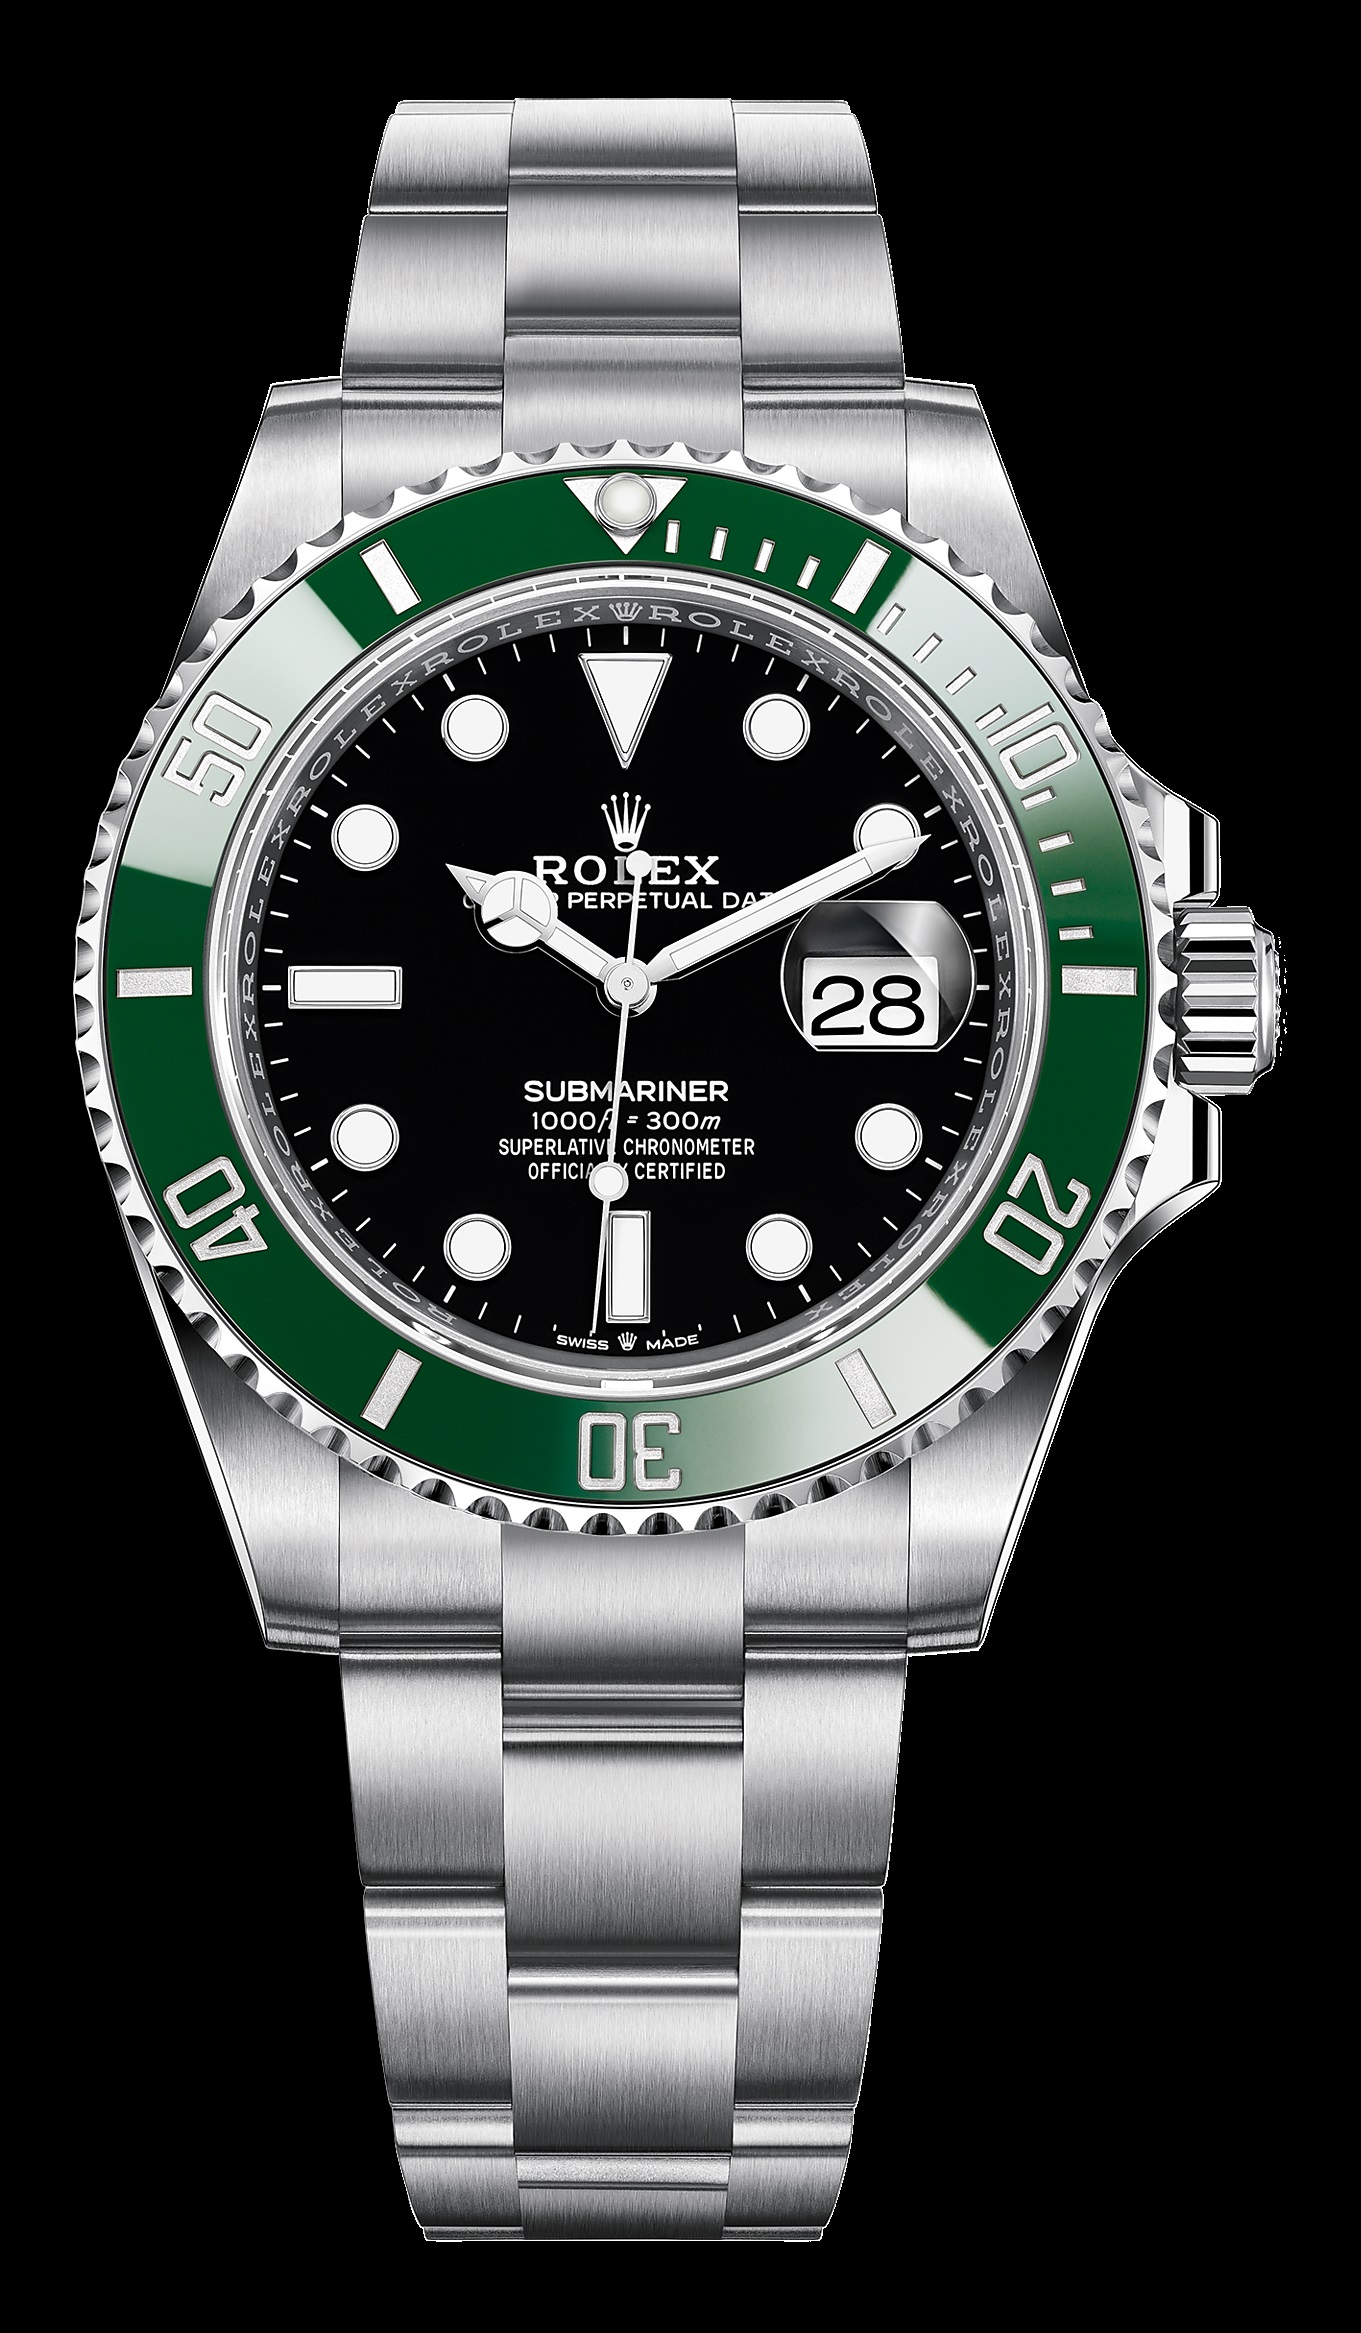 Rolex Submariner 126610LV Watch With 